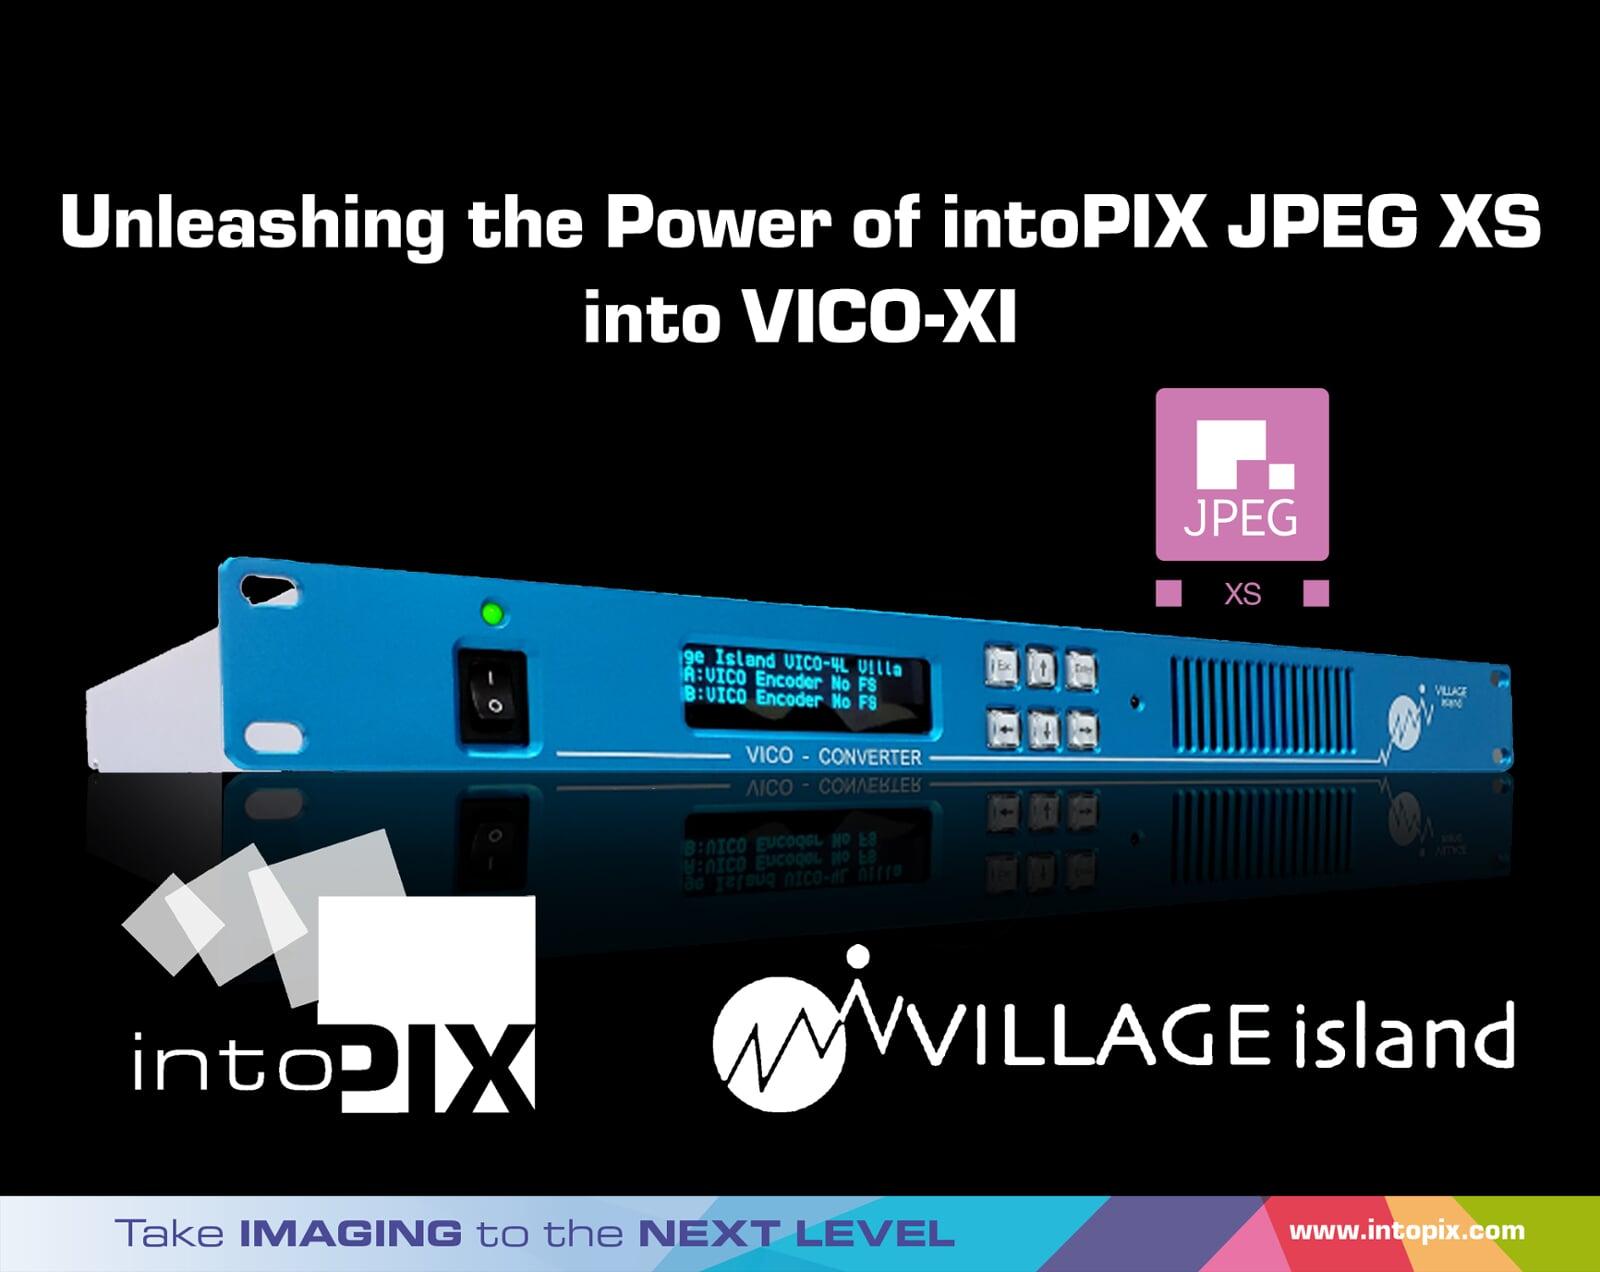 Village Island의 VICO-XI는 intoPIX 기술을 사용하여 감소된 대역폭과 마이크로초 대기 시간으로 IP 비디오 변환의 혁명을 일으키고 있습니다.